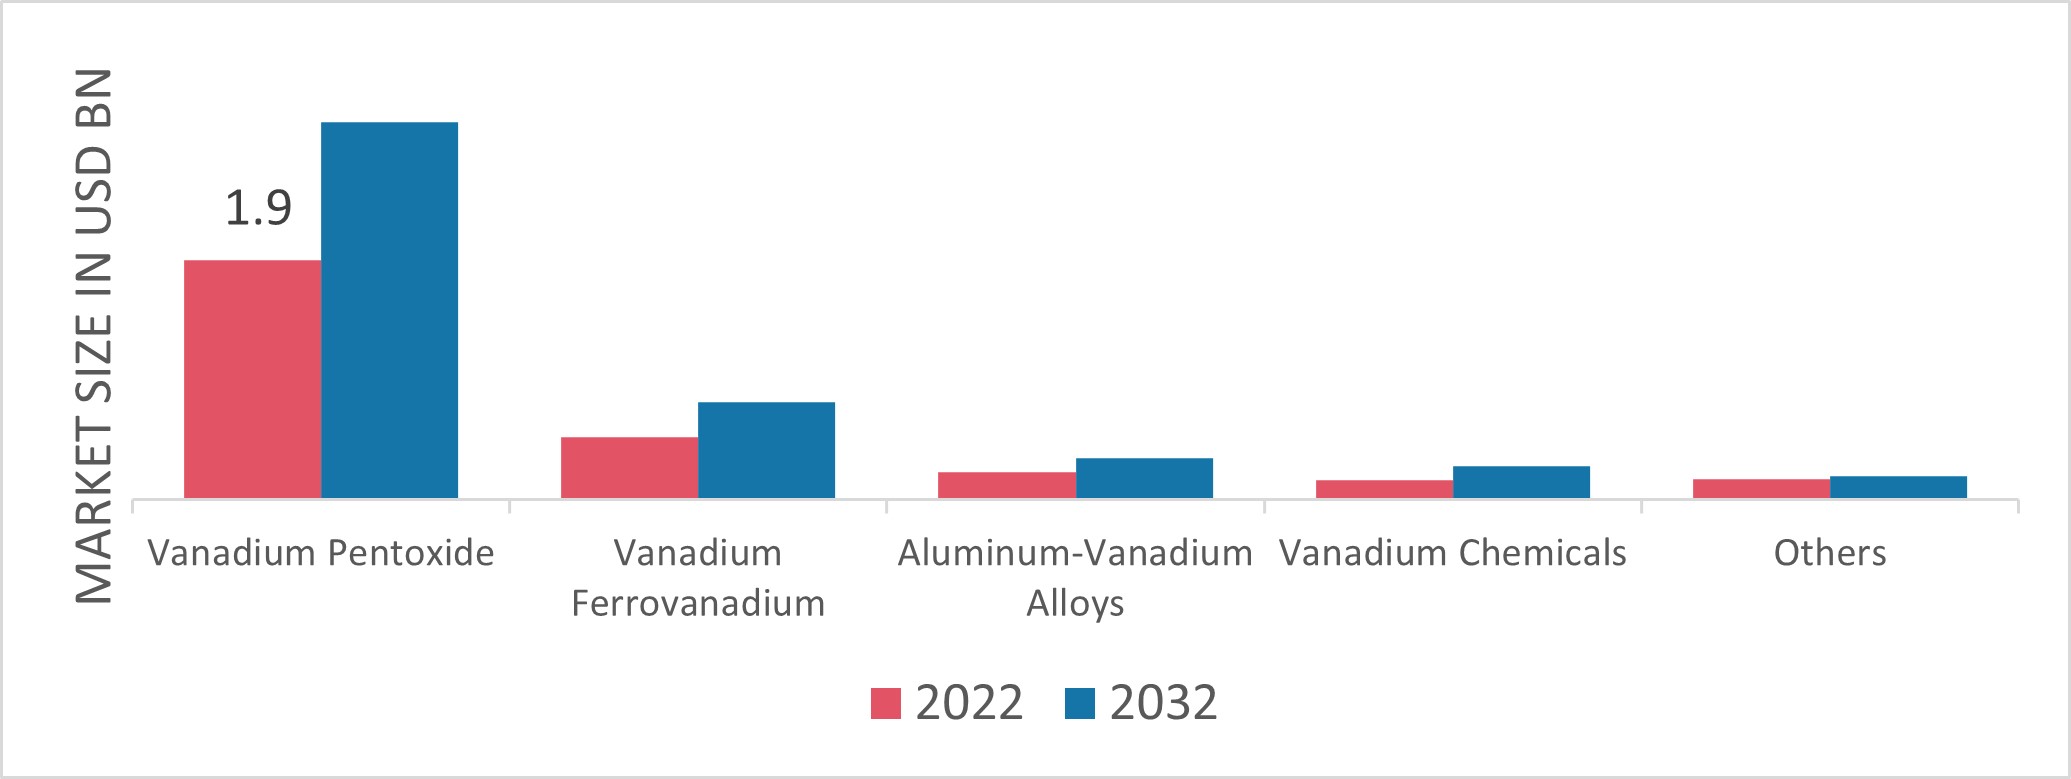 Vanadium Market, by Type, 2022 & 2032